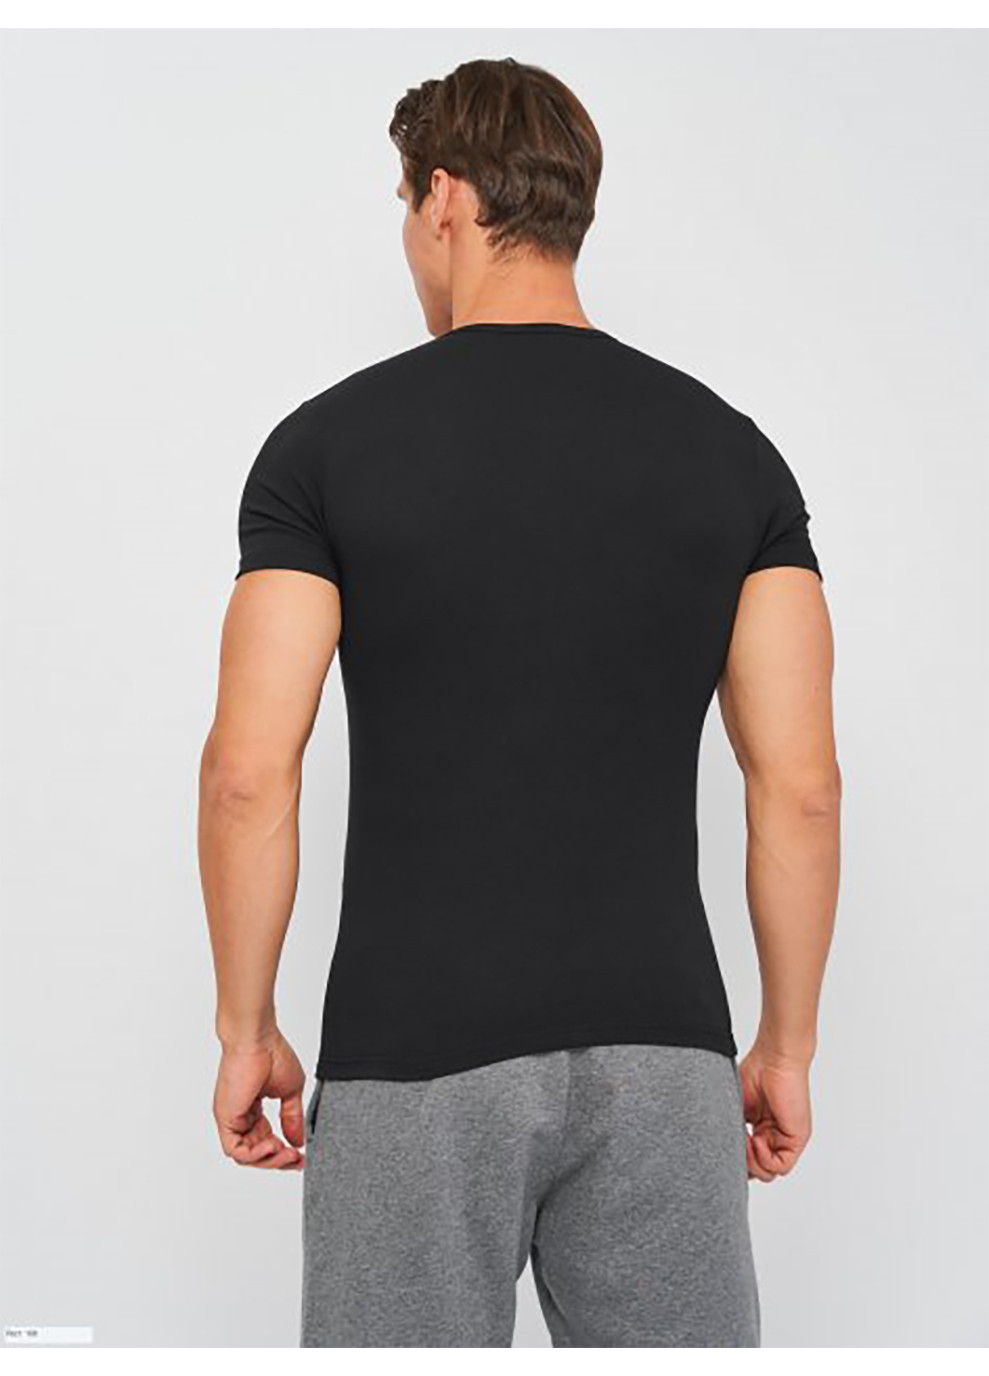 Черная футболка t-shirt mezza manica girocollo черный l муж k1306 nero-l Kappa